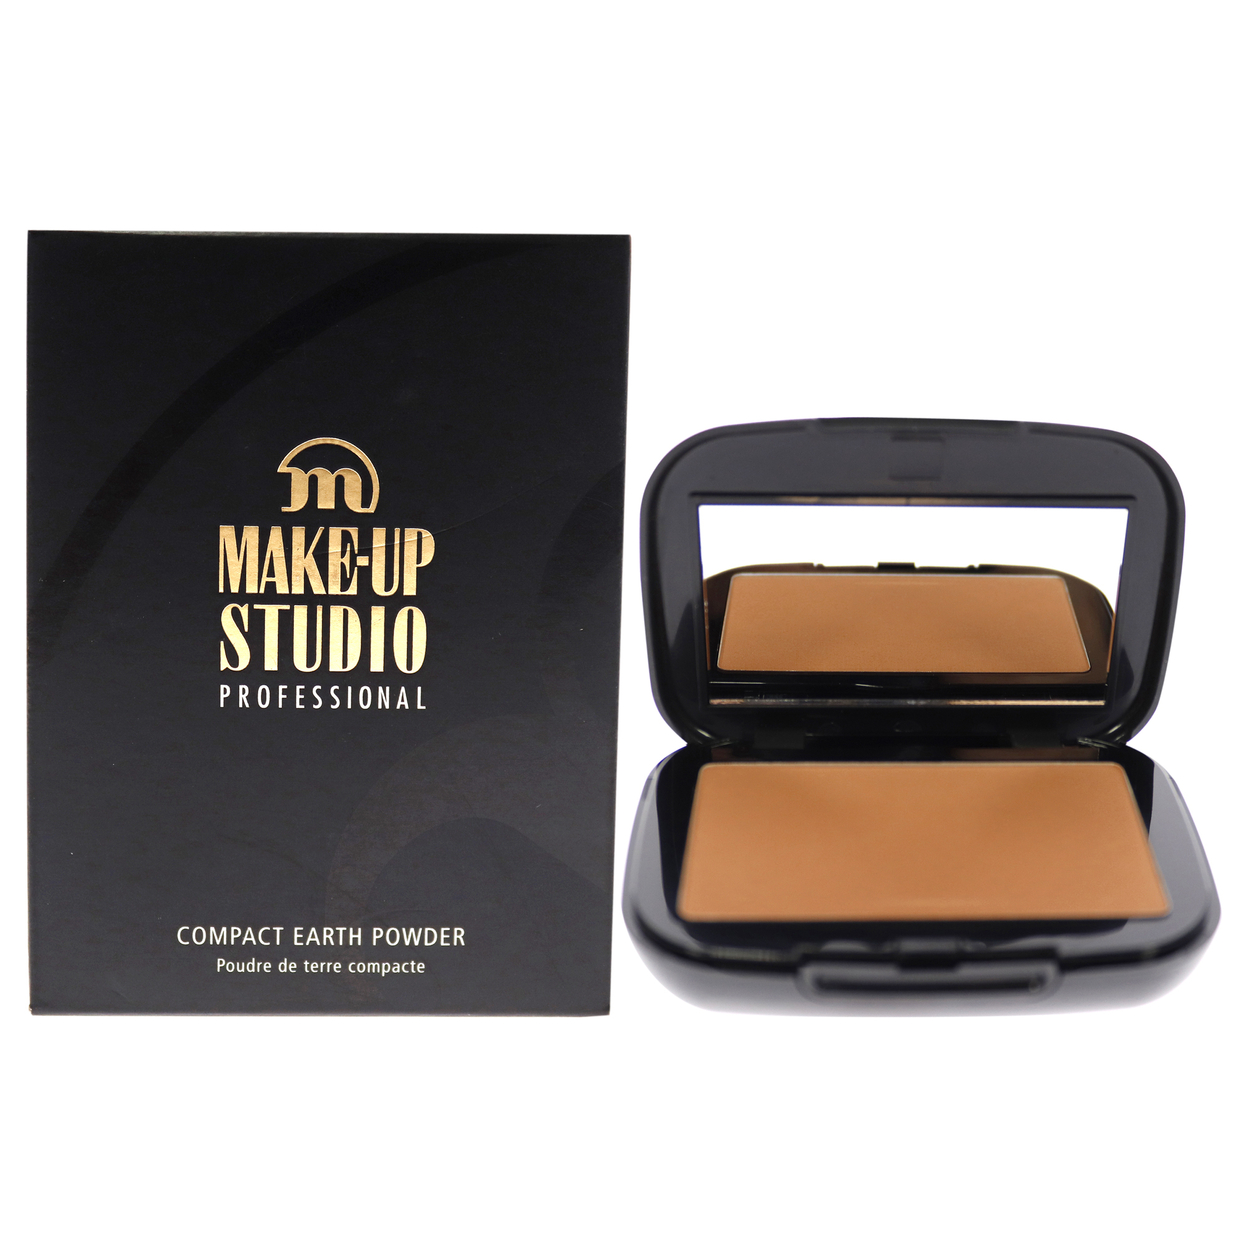 Make-Up Studio Compact Earth Powder - M1 Fair To Light 0.39 Oz